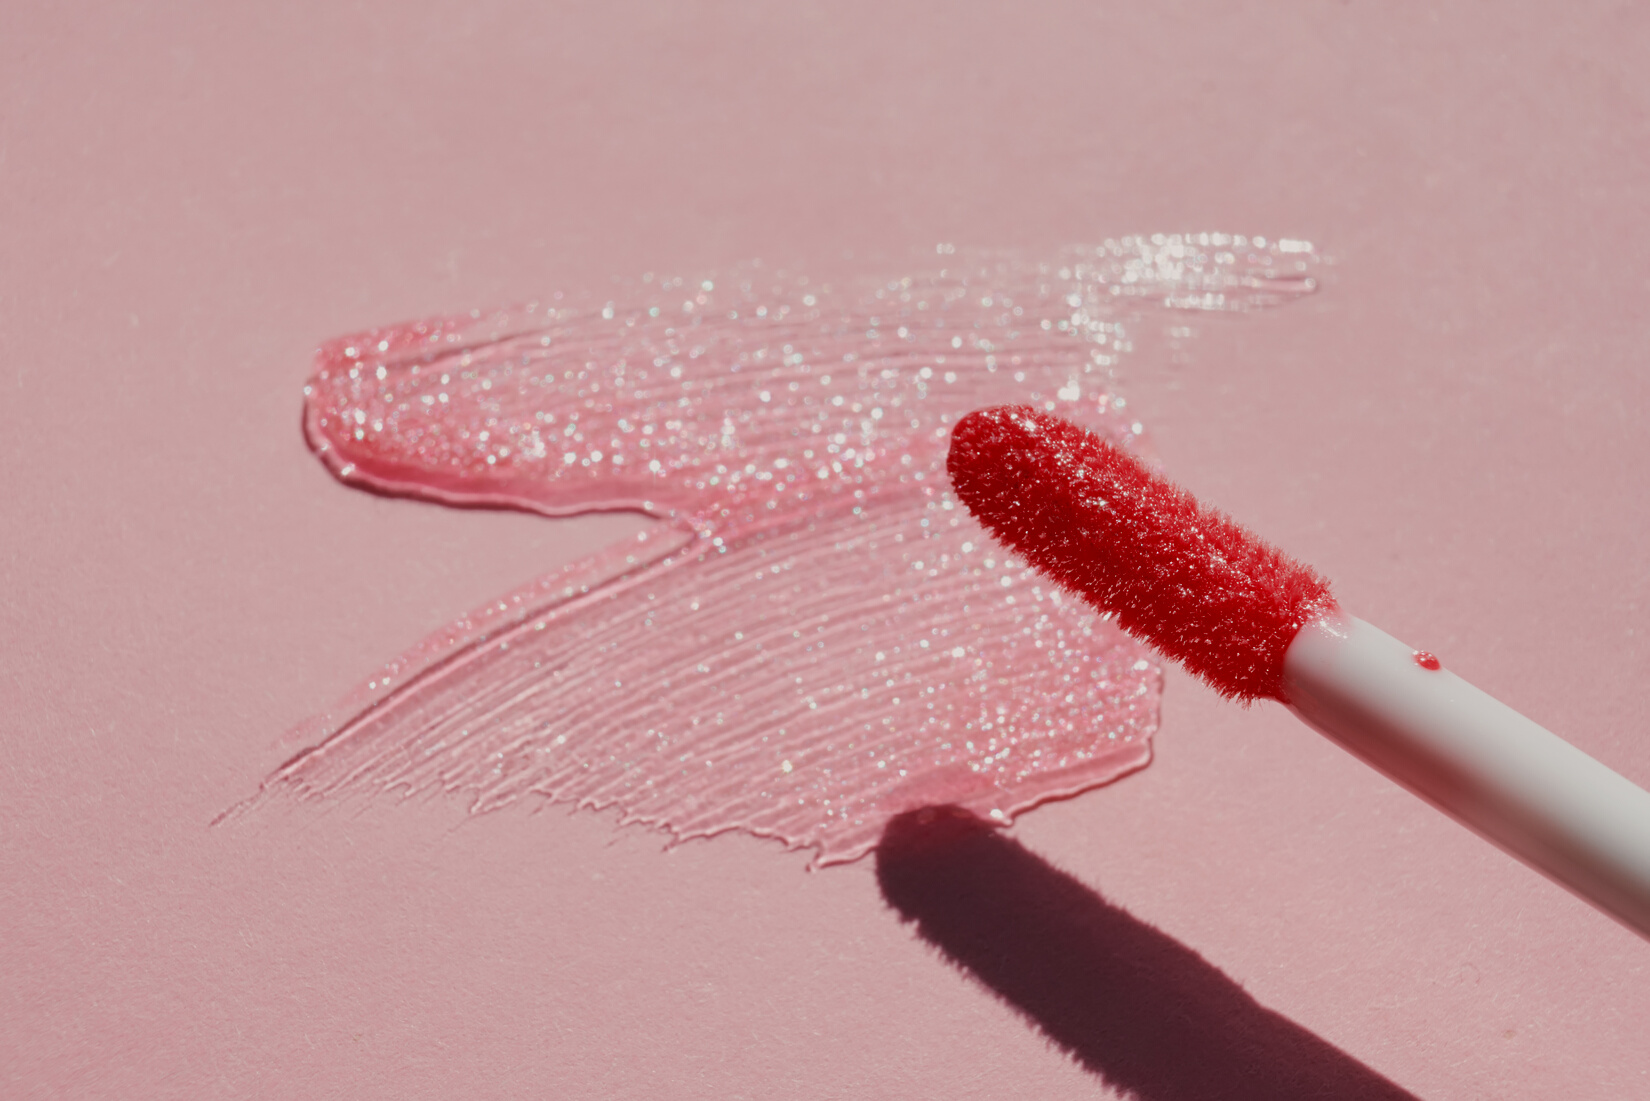 Smears of shining lip gloss and lip gloss brush on pink background, hard shadows